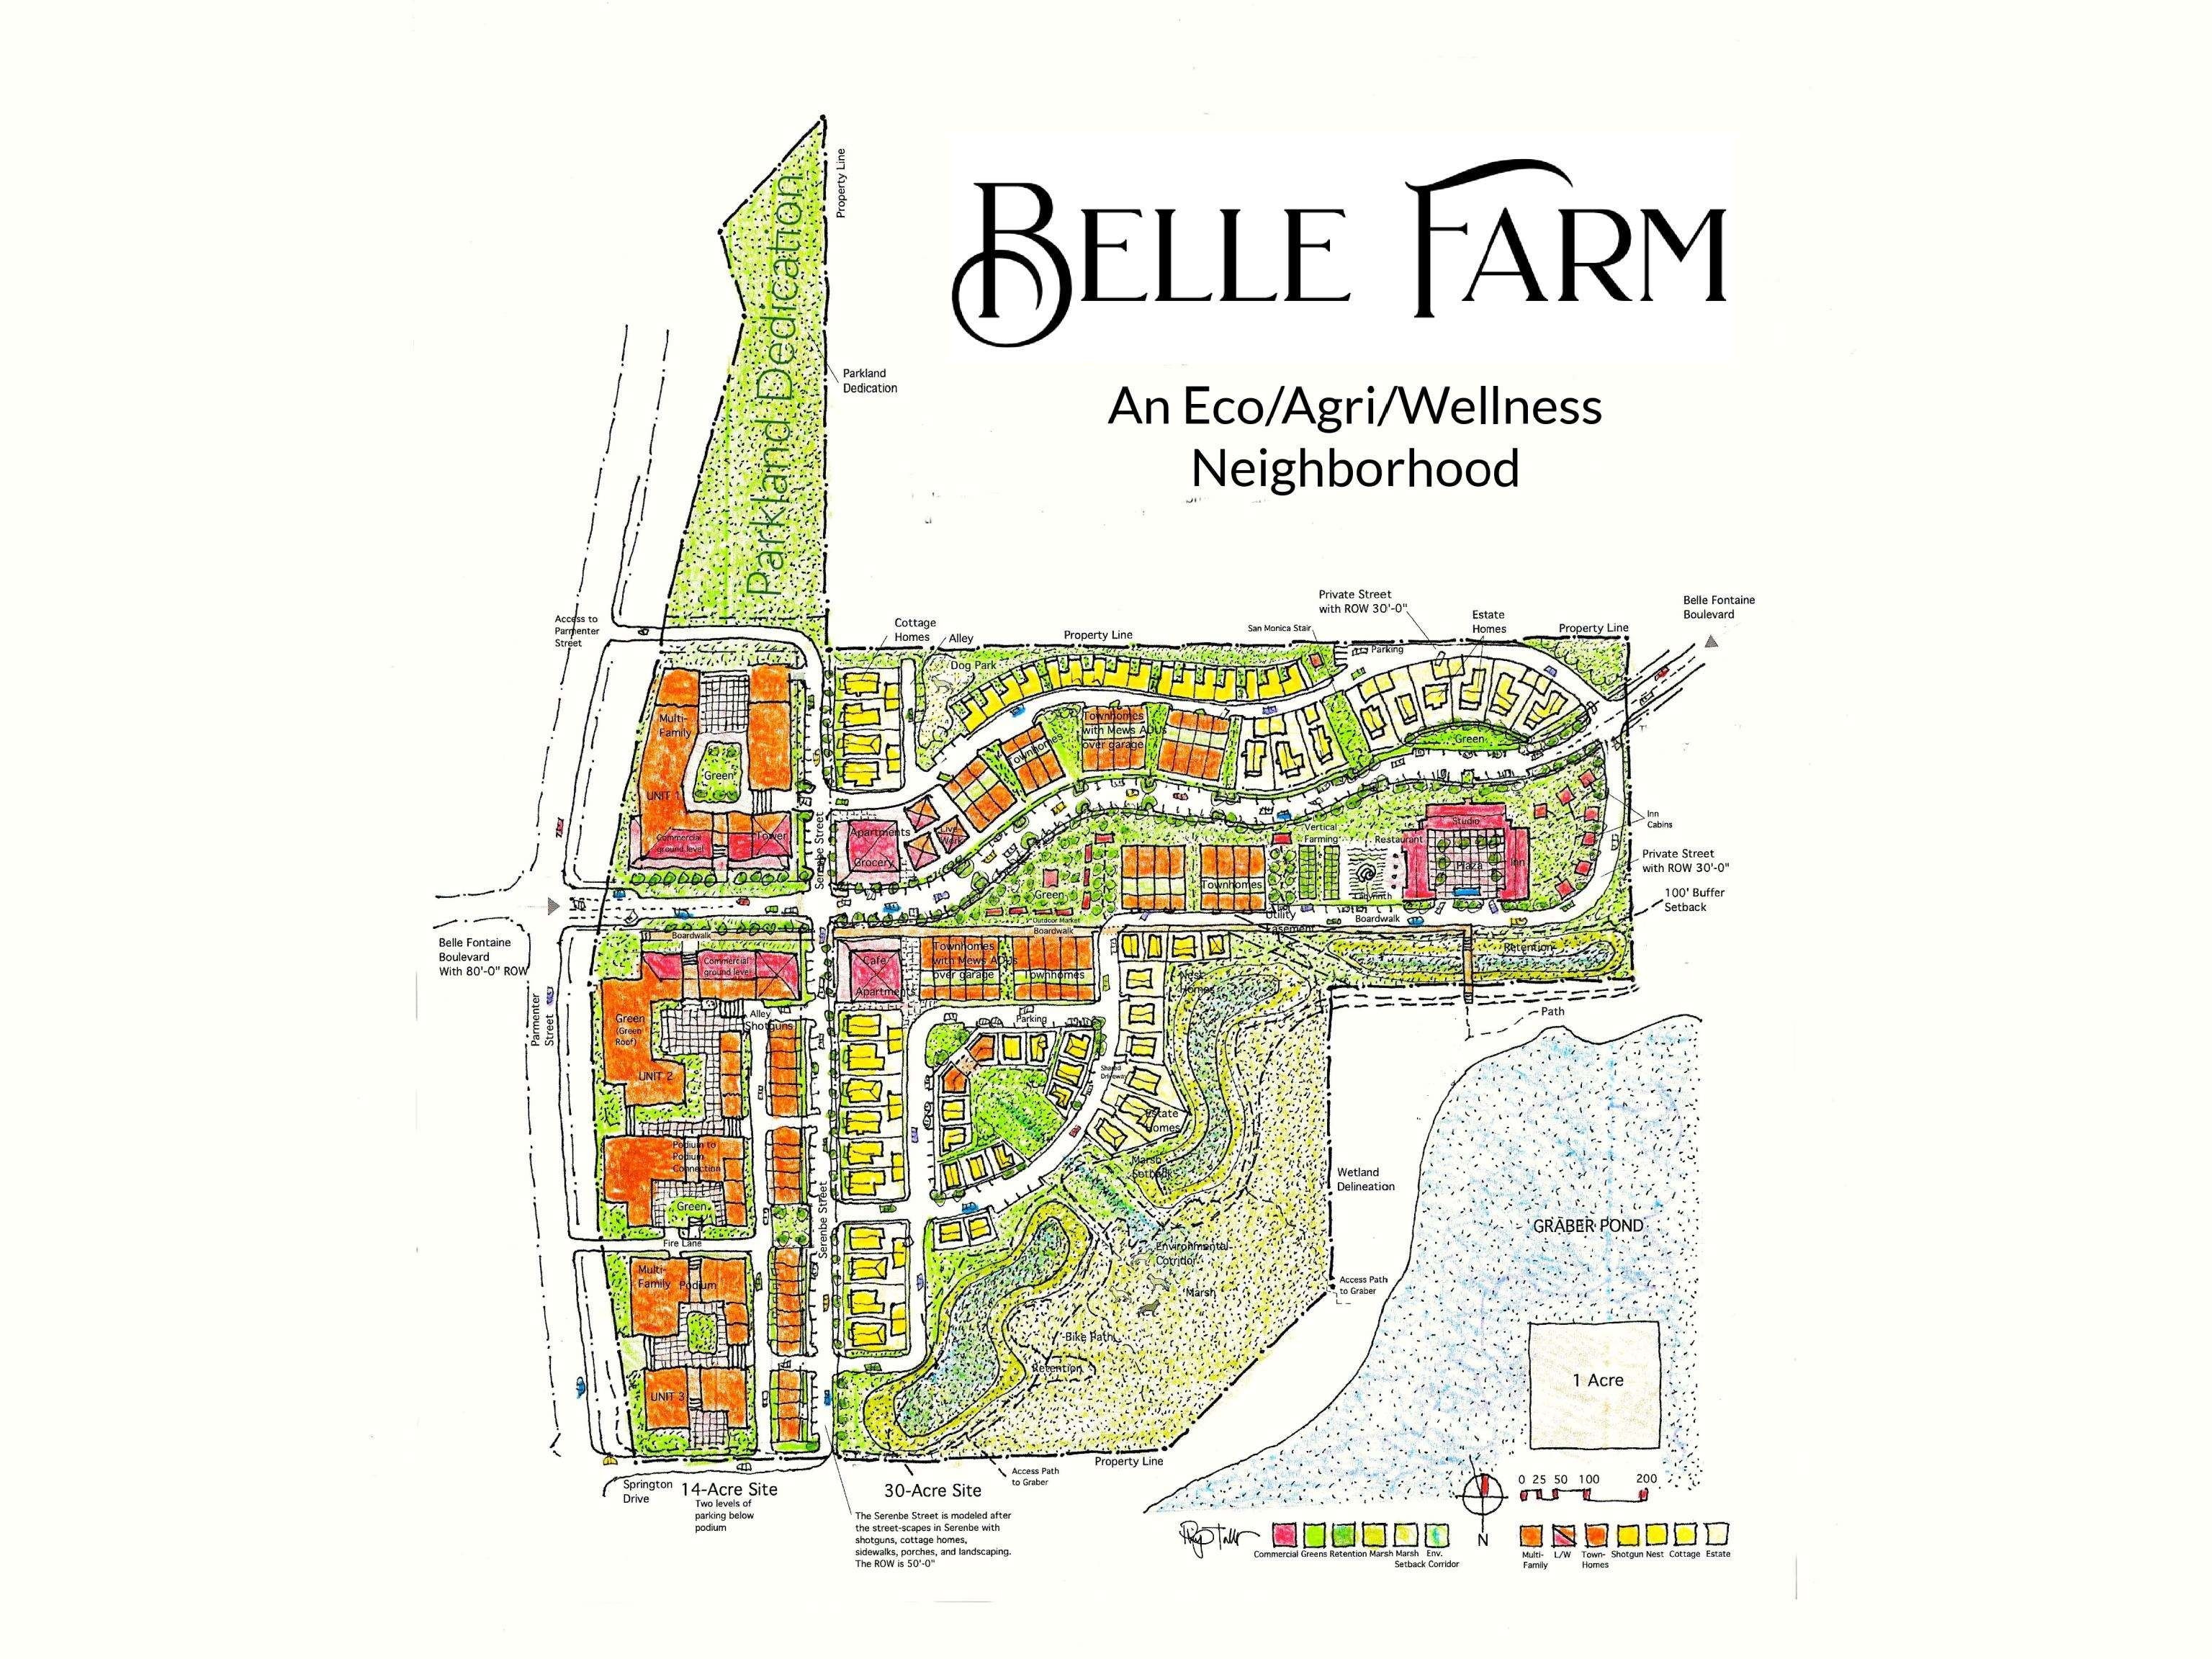 3. Lot 9 Belle Farm